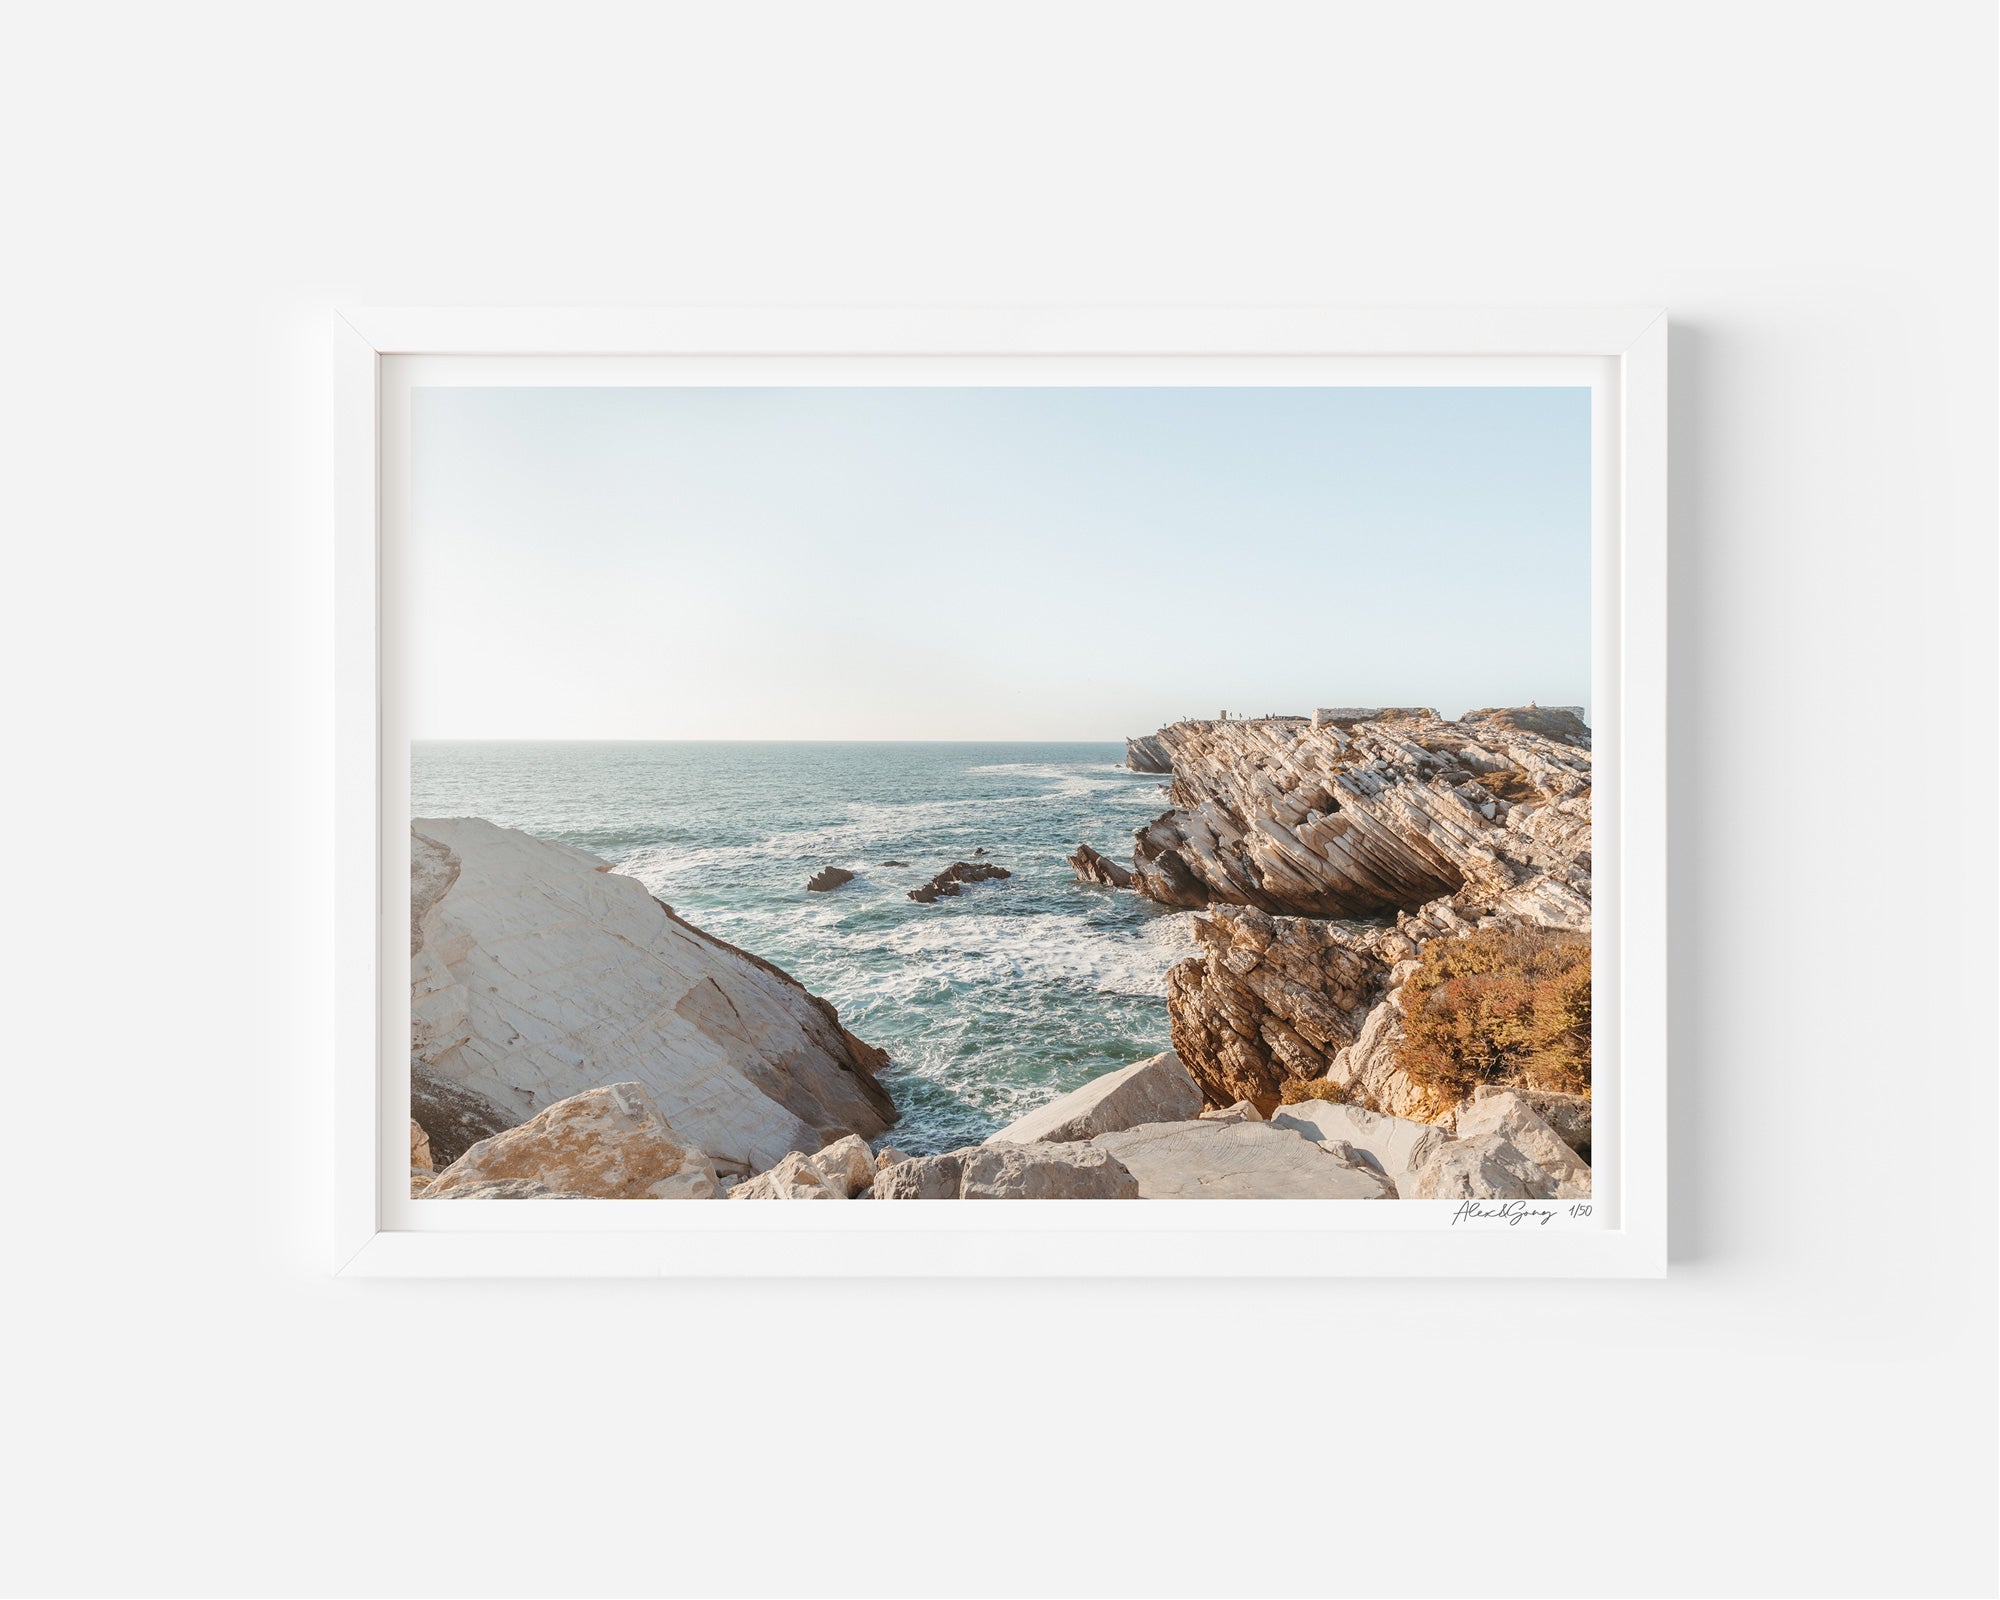 WILD WANDERLUST, Baleal, Portugal • Limited Edition - Alex and Sony